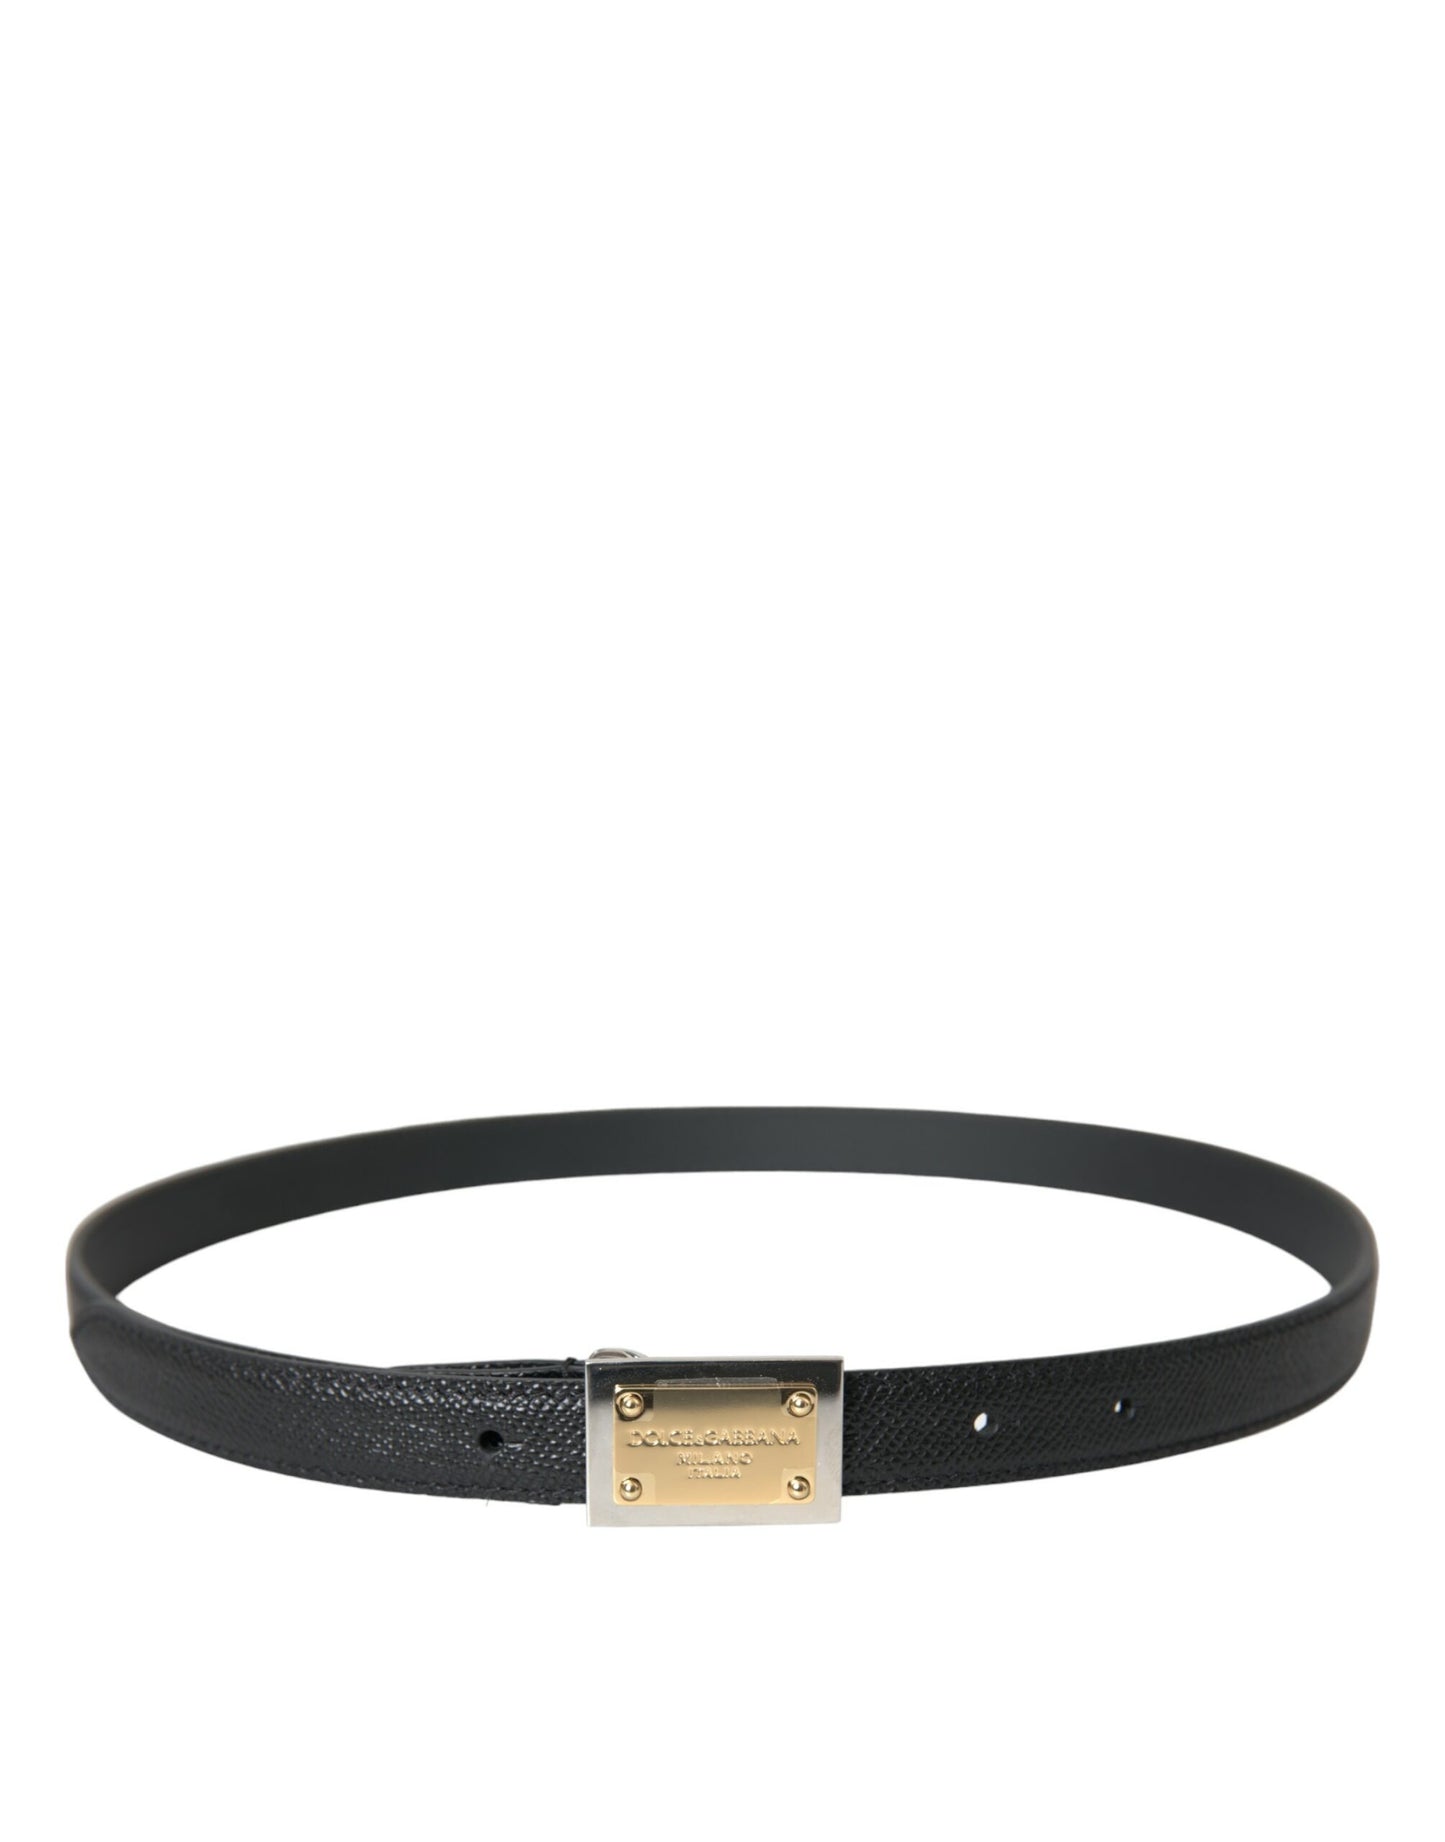 Dolce & Gabbana Black Leather Gold Square Metal Buckle Belt